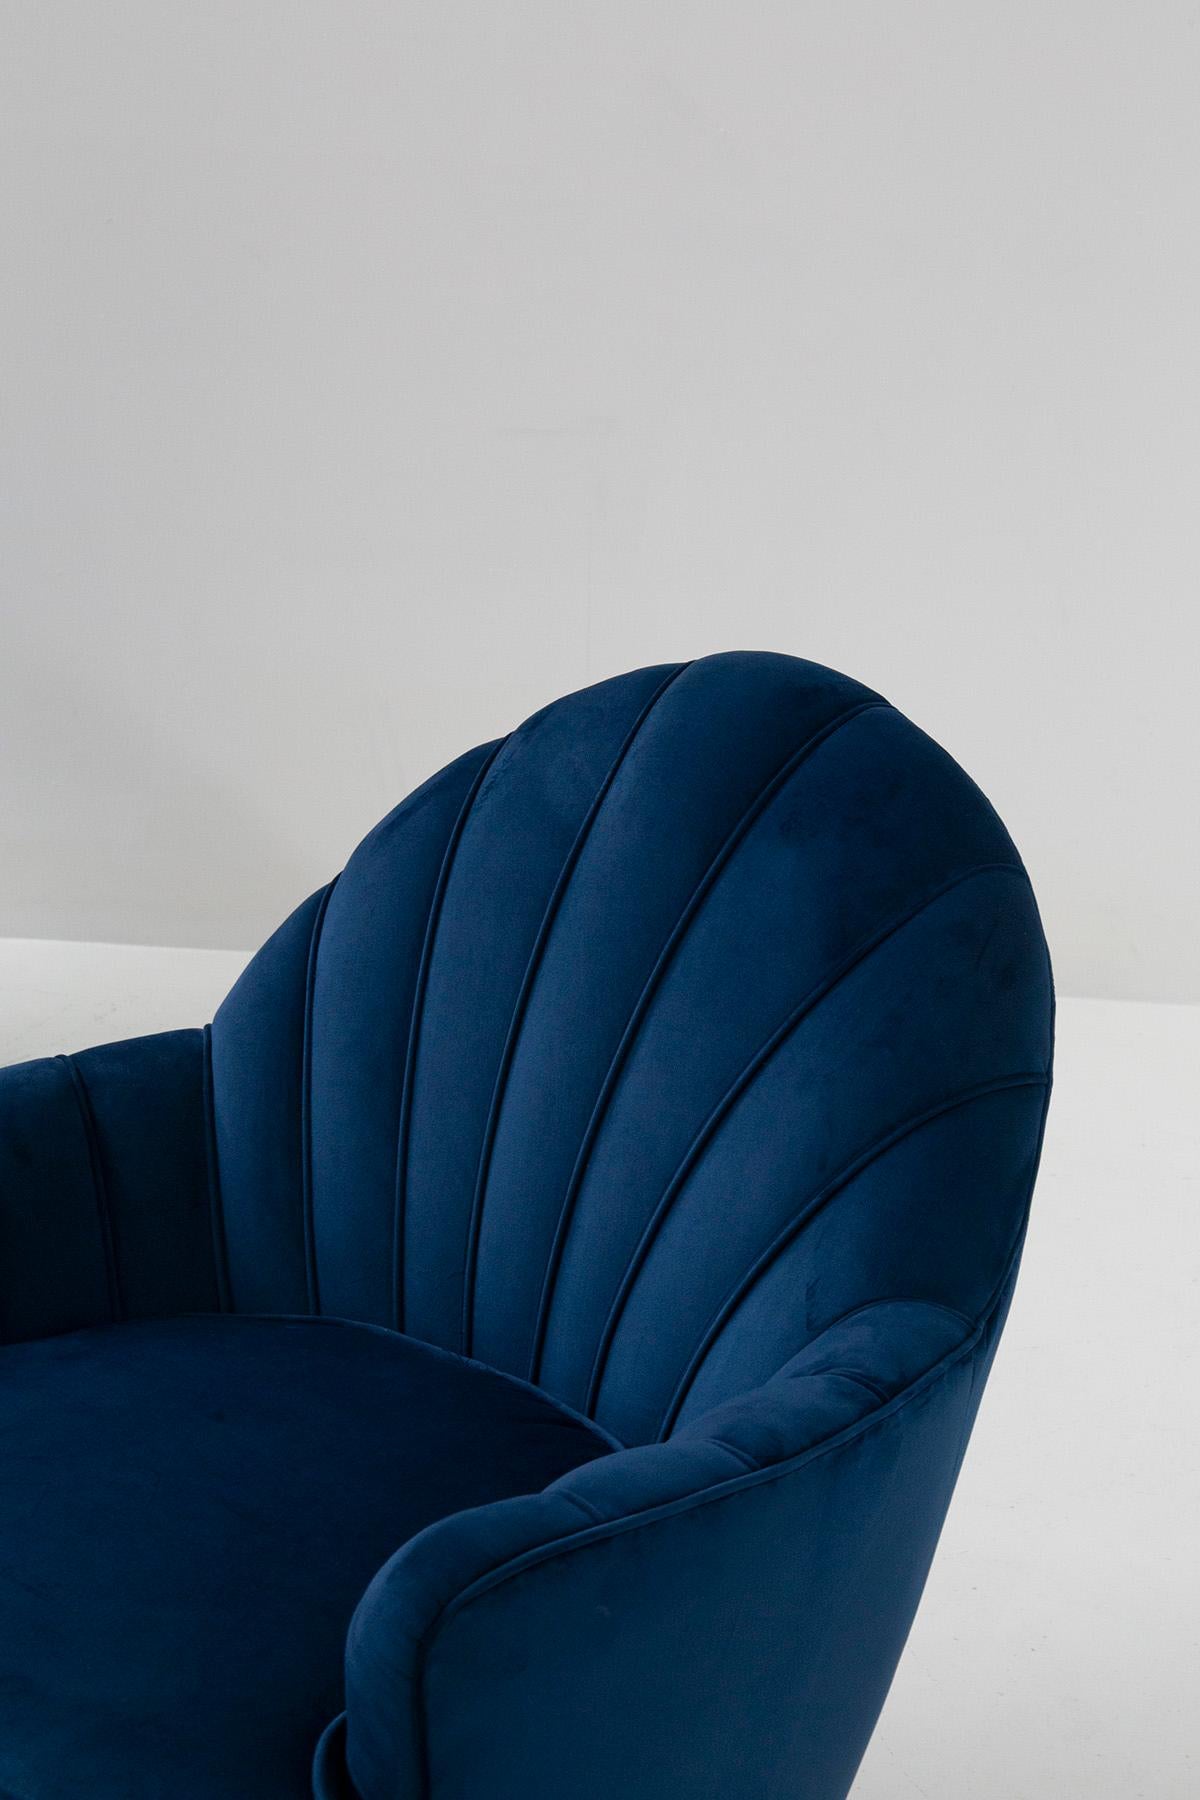 Mid-20th Century Pair of Midcentury Italian Shell Chairs in Blue Velvet